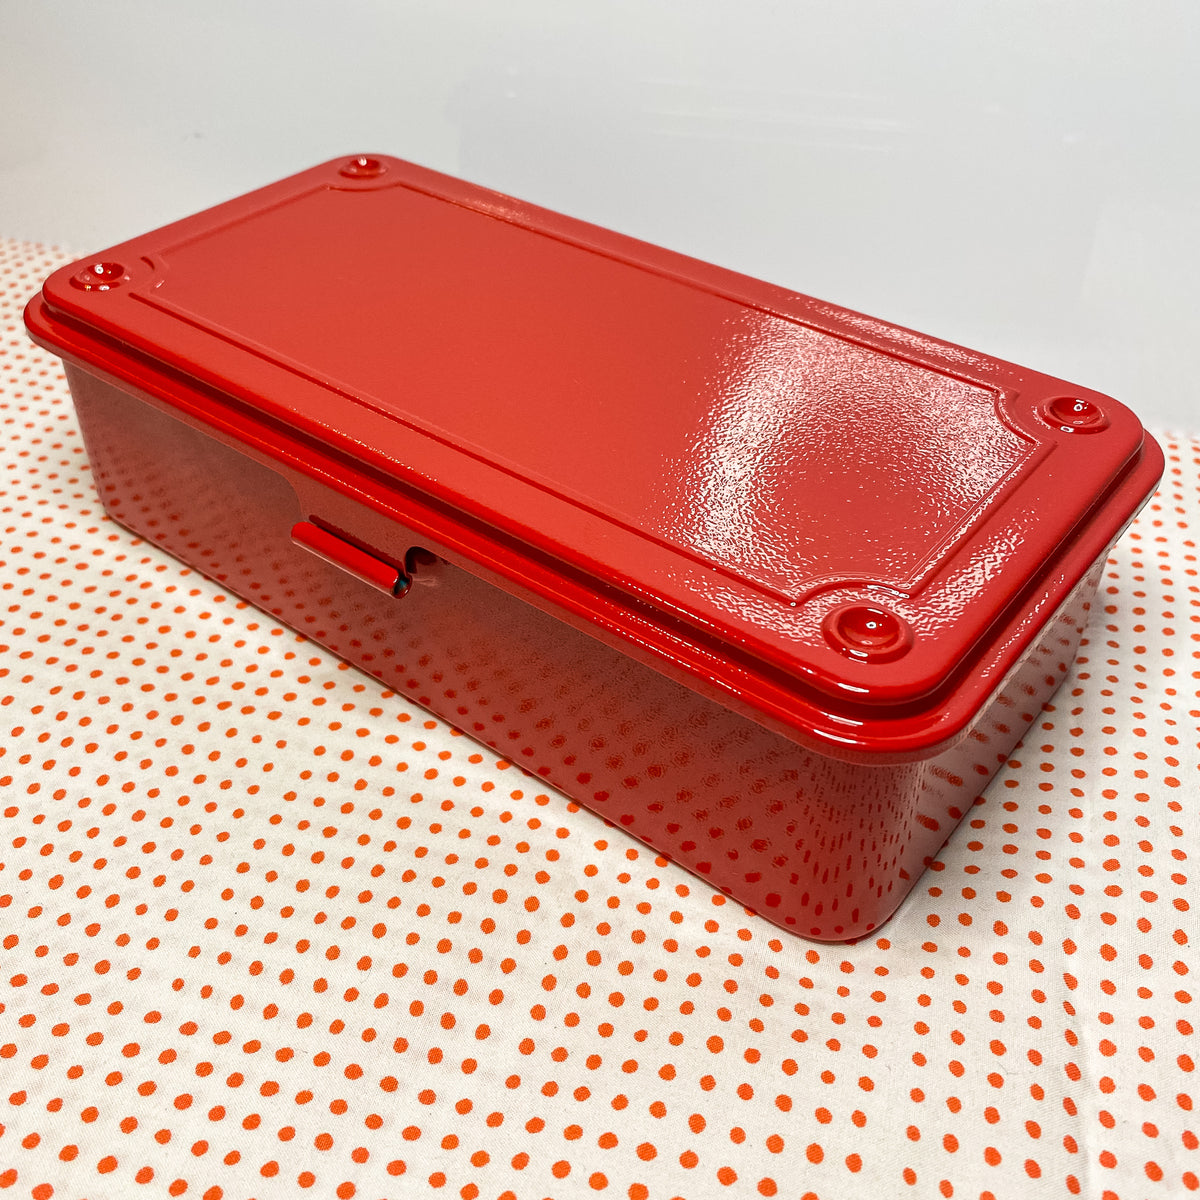 Toyo Steel Metal Tool Box (Red) &quot;Grab Box&quot;